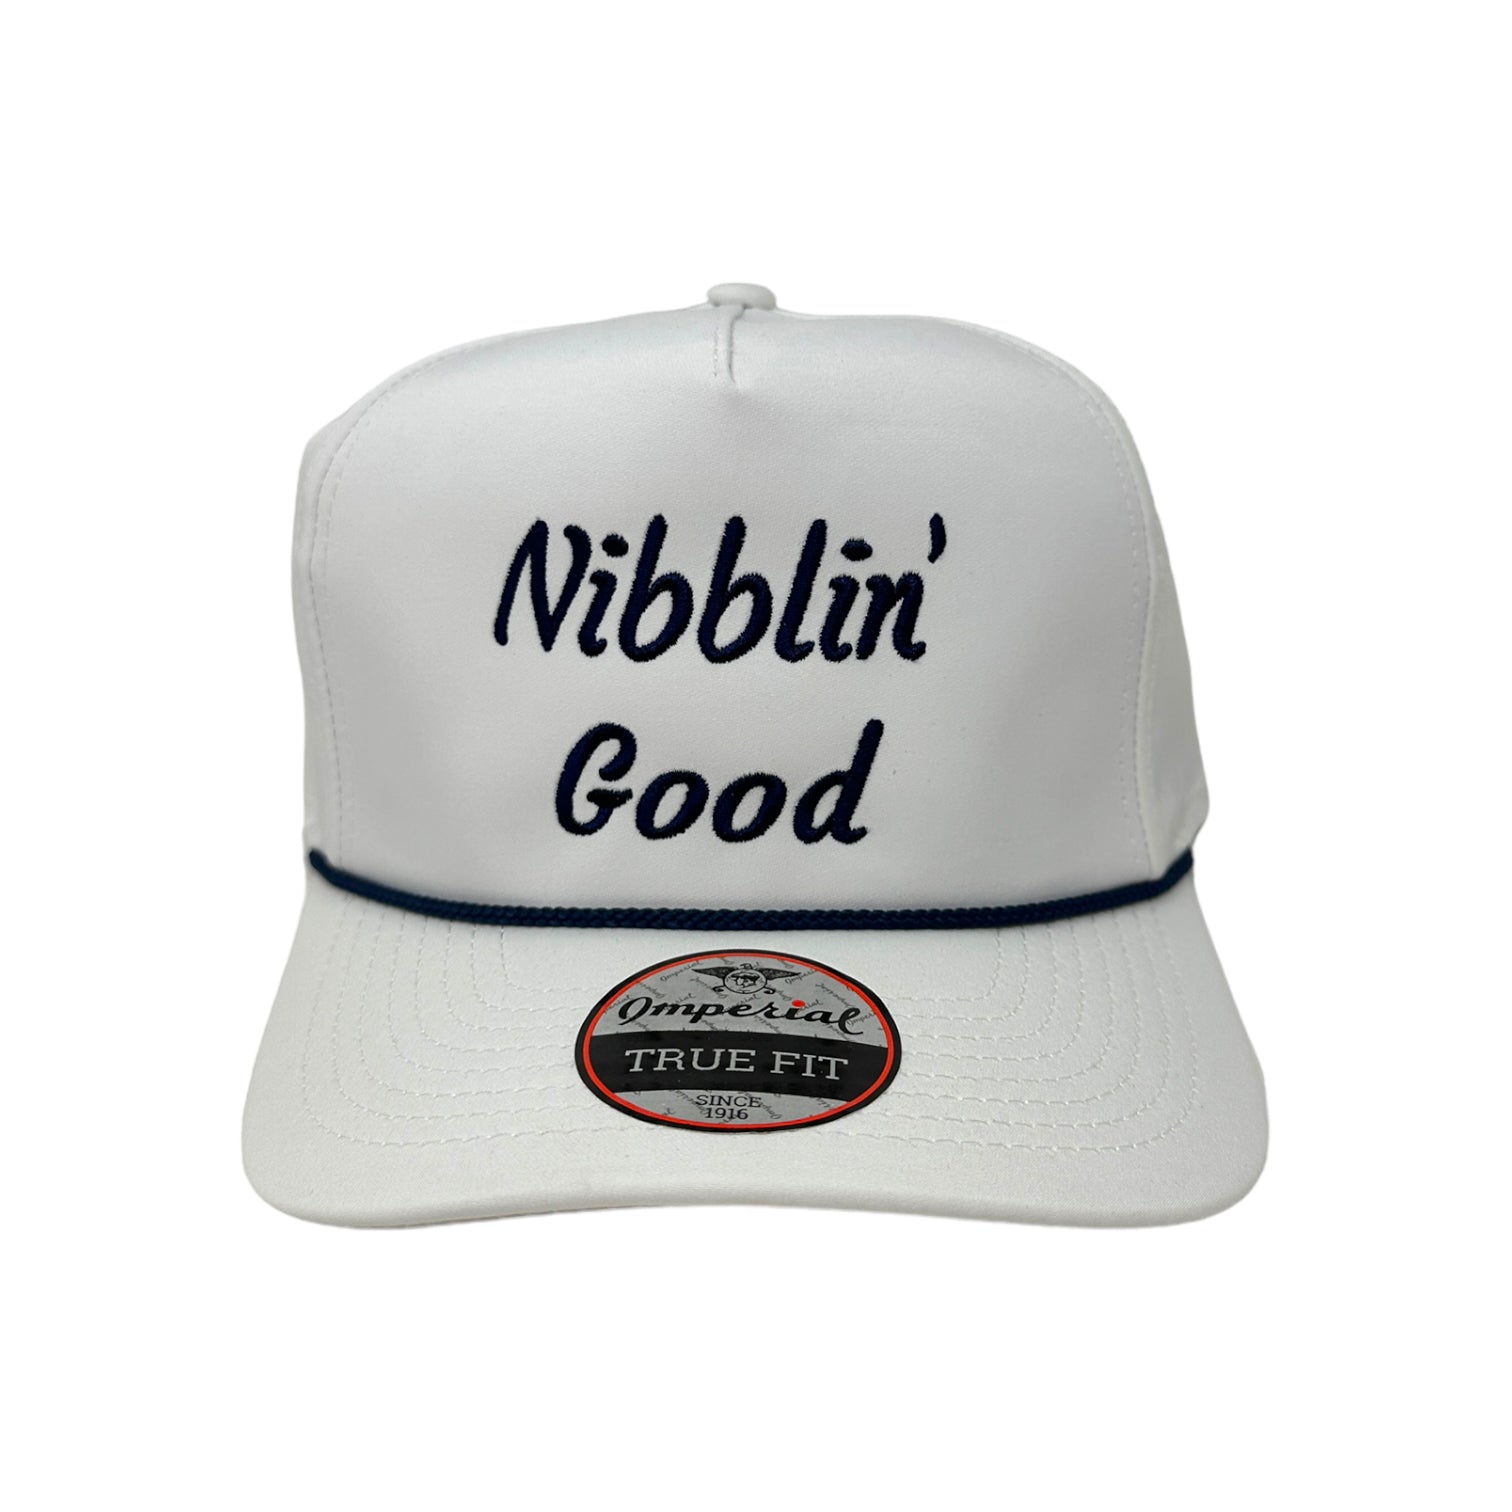 Nibblin’ Good Hat - Alma Creamery